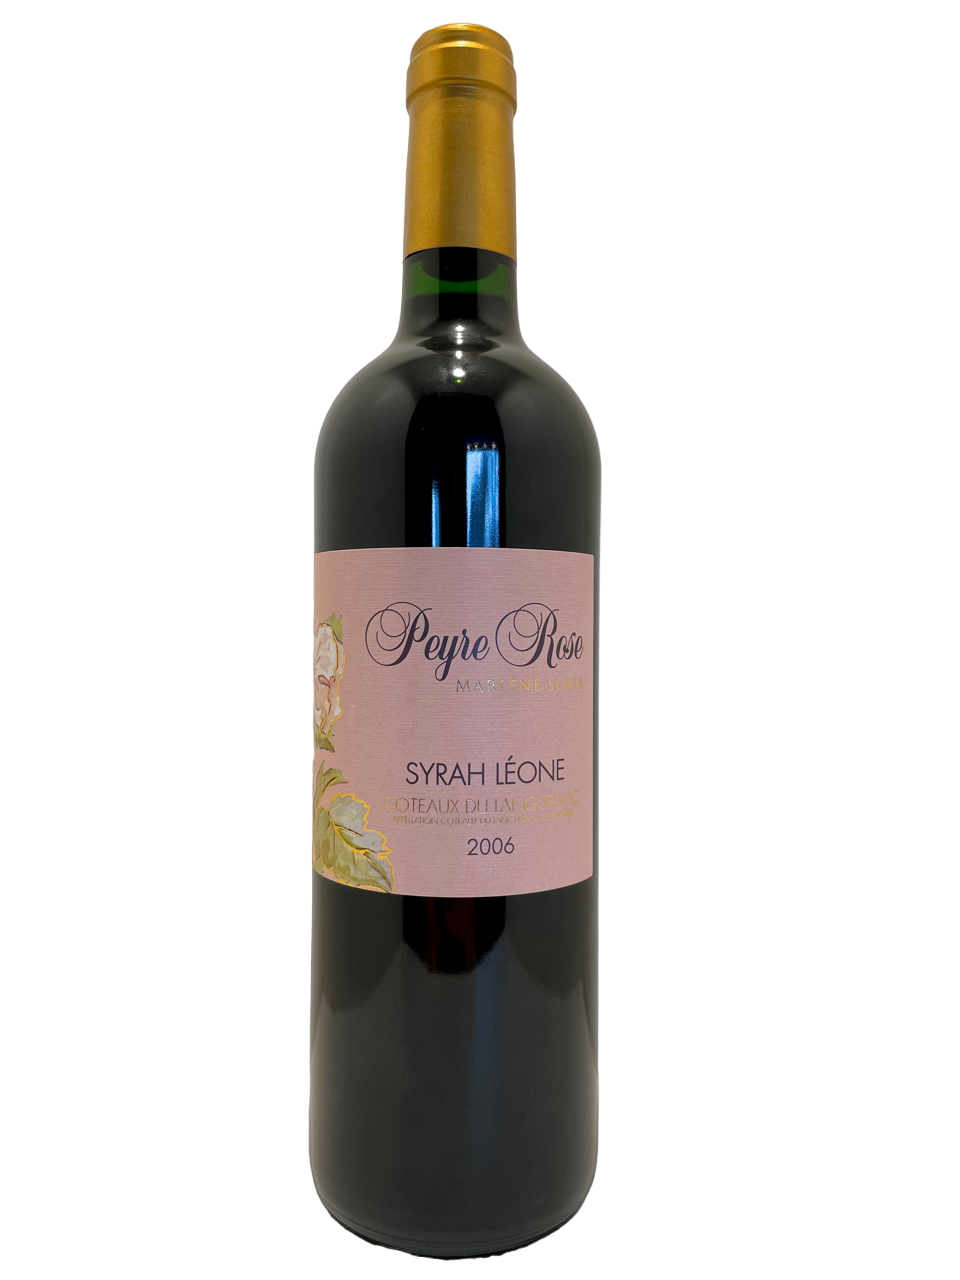 languedoc wine von organic biodynamie coteaux du languedoc syrah léone domaine peyre rose marlène soria 2006 